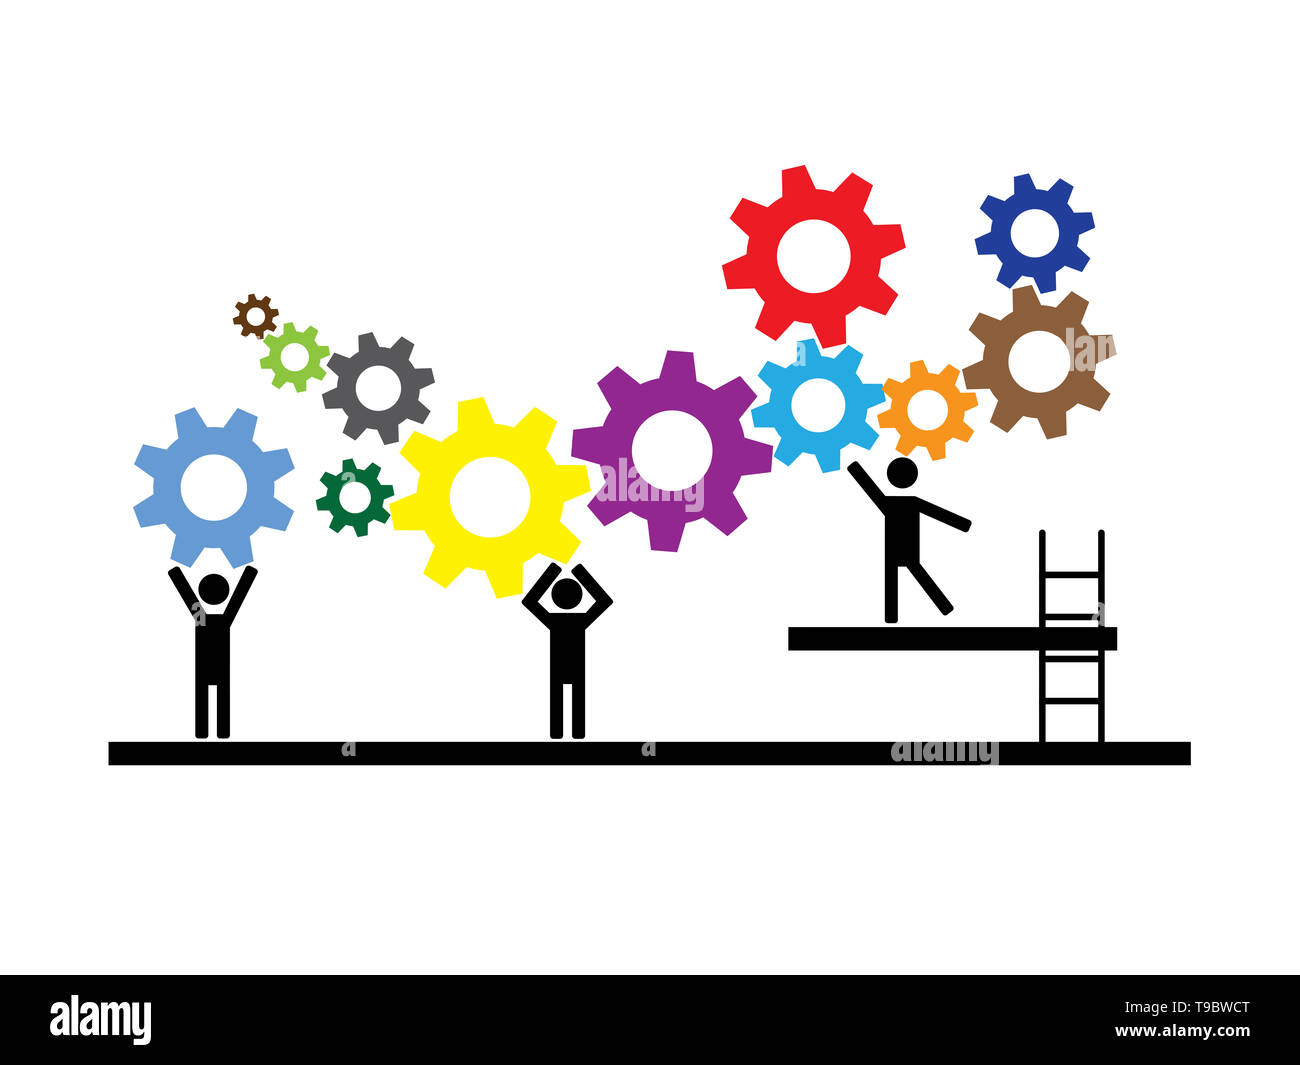 People working together illustrating teamwork illustration isolated. Stock Photo